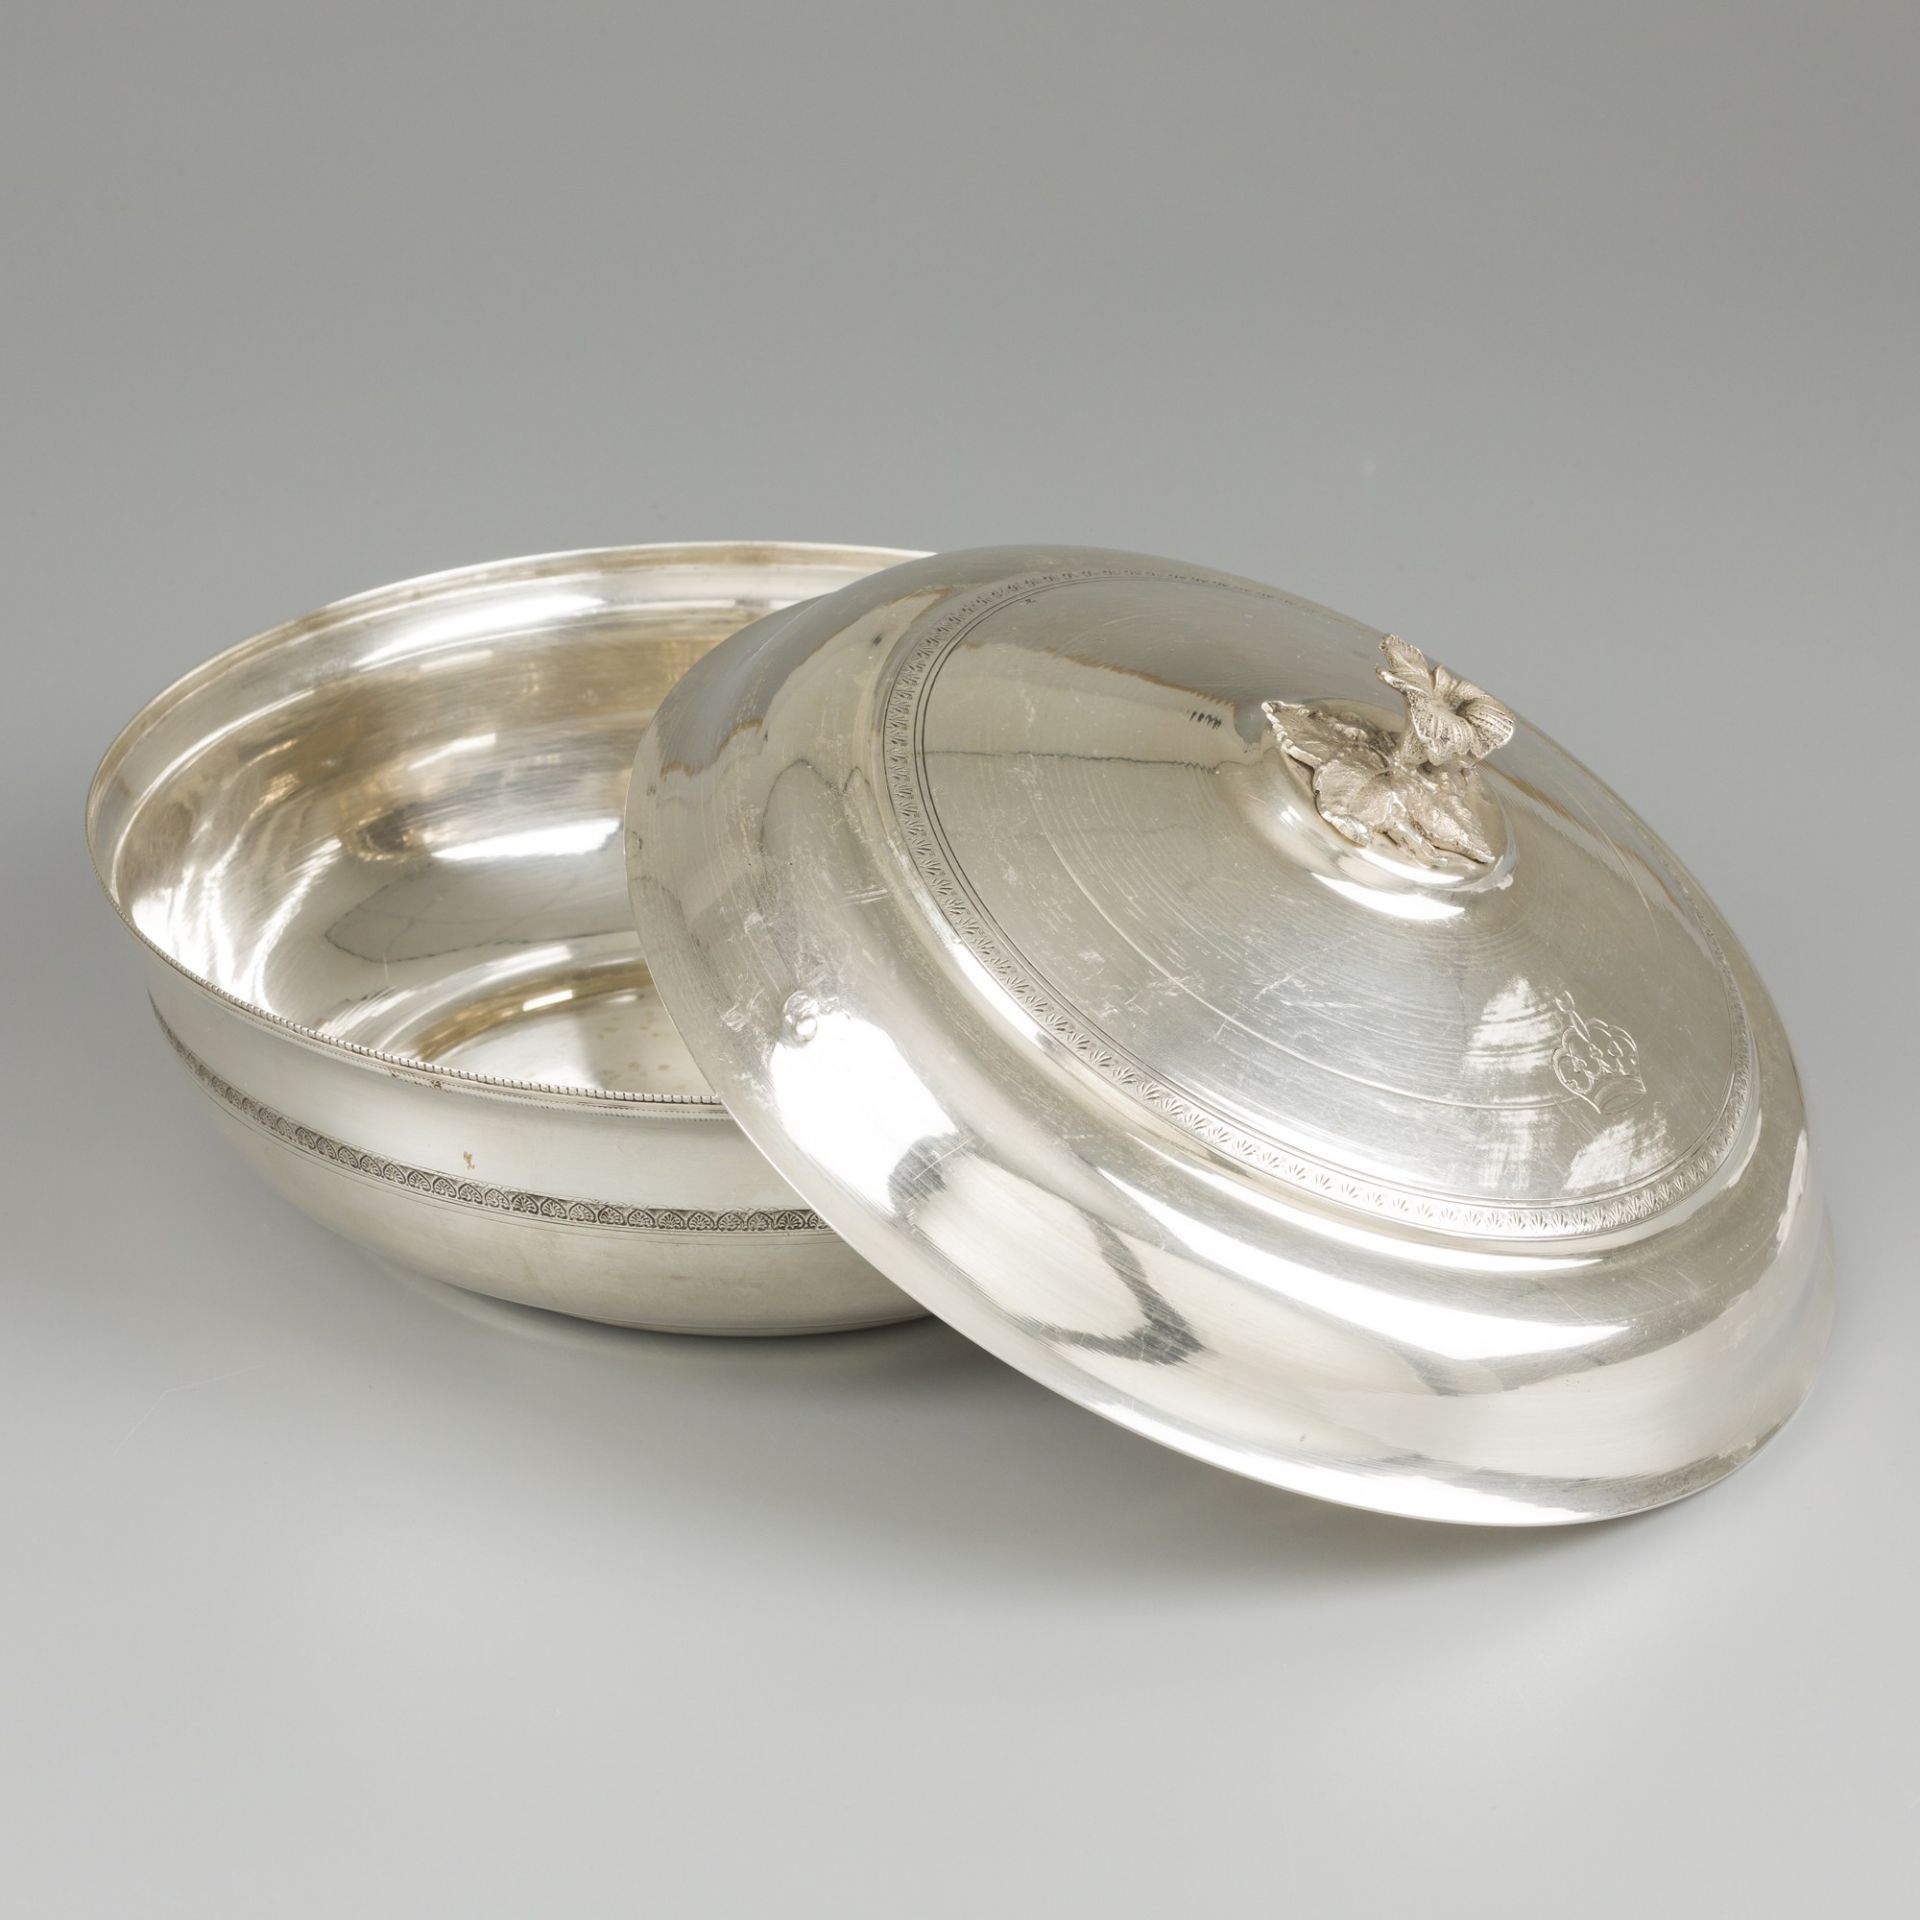 Couscous bowl silver. - Image 2 of 5